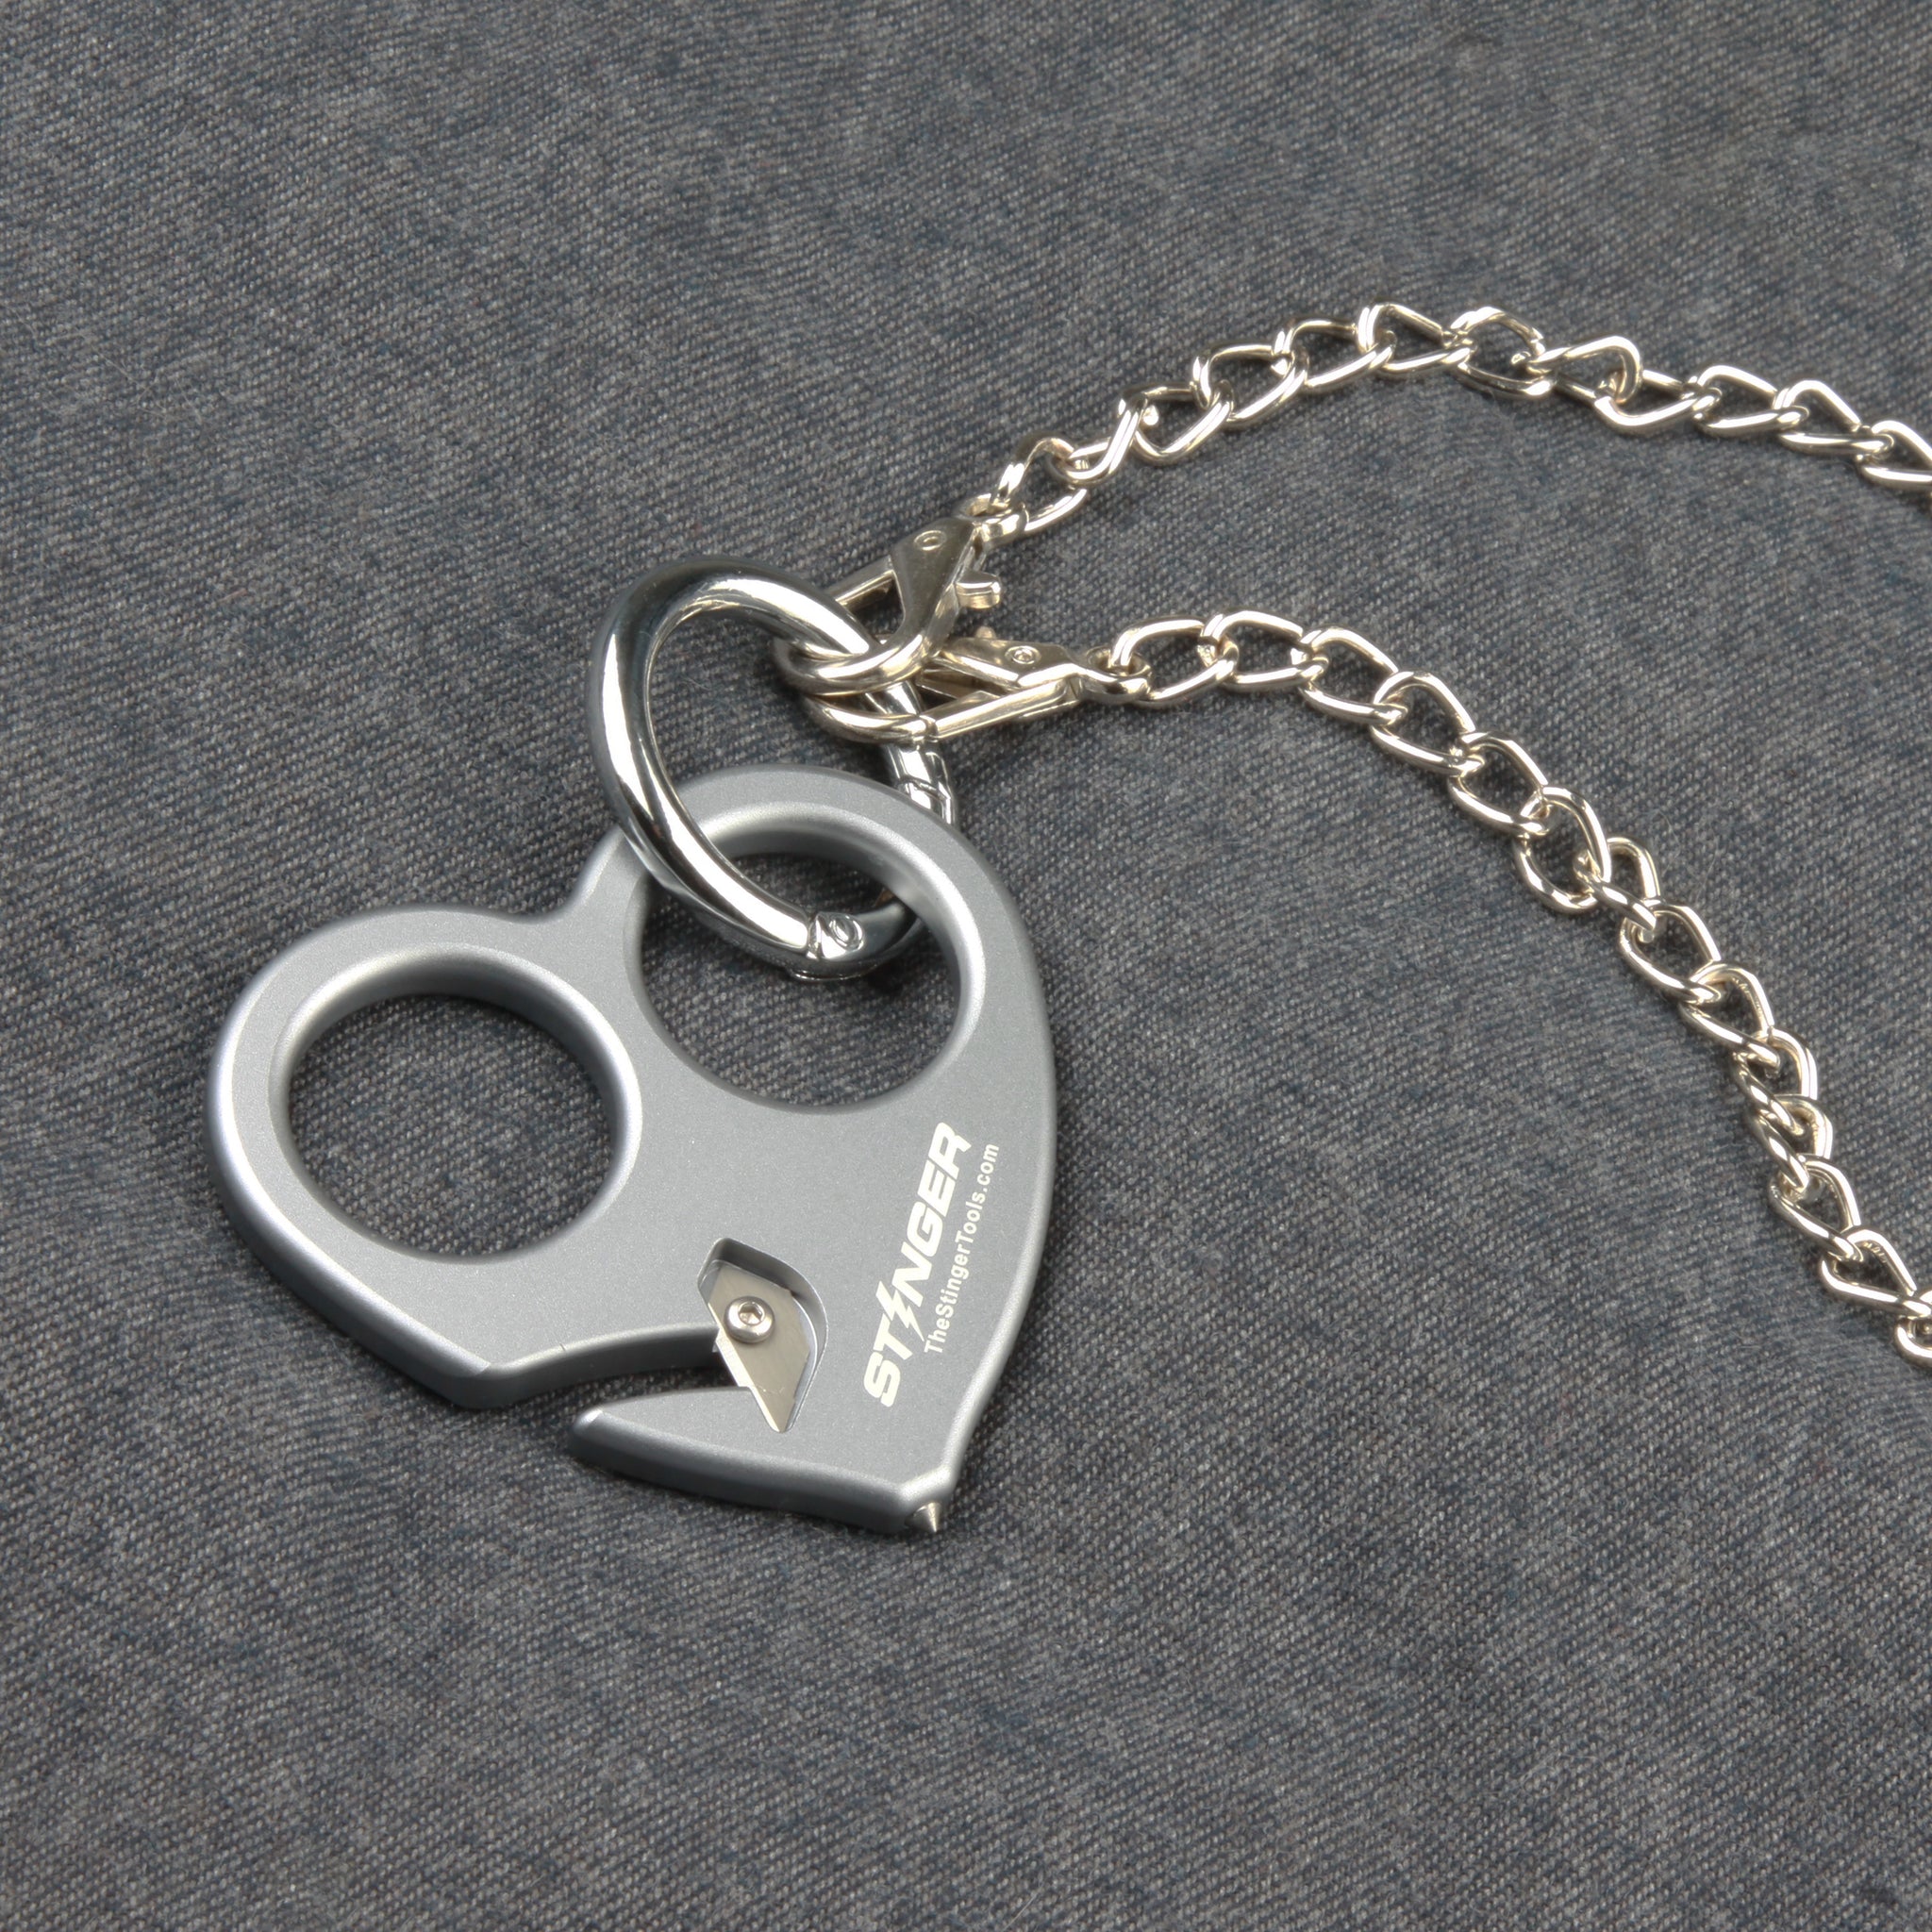 Stinger Sweetheart Heart Shaped Self-Defense Keychain & Car Emergency Tools